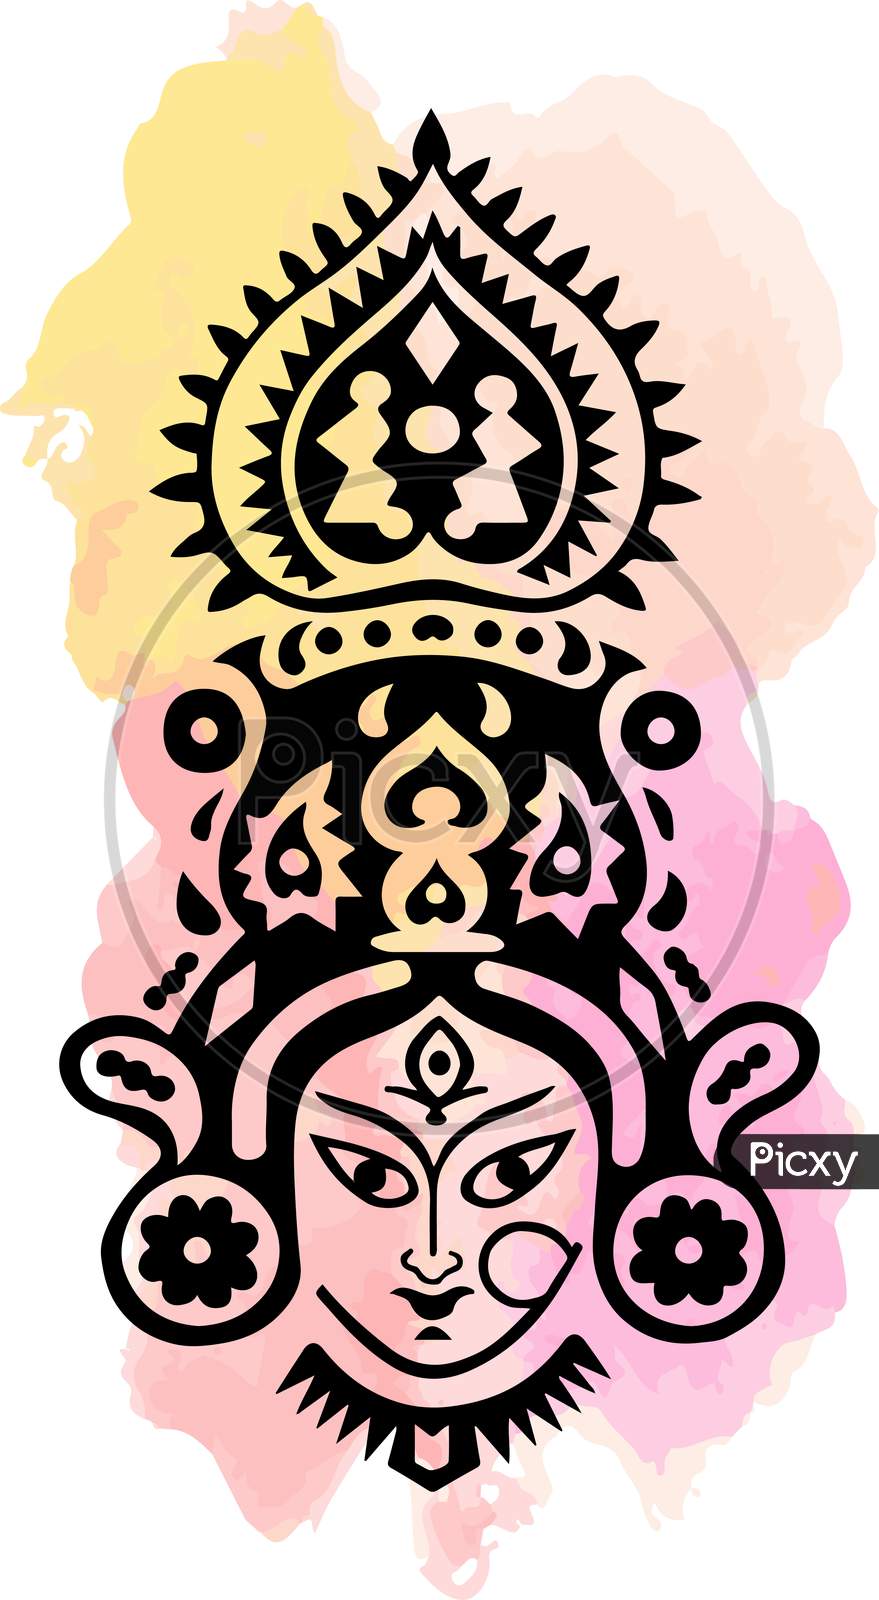 Amazing Pencil Sketch Of Goddess Durga | DesiPainters.com